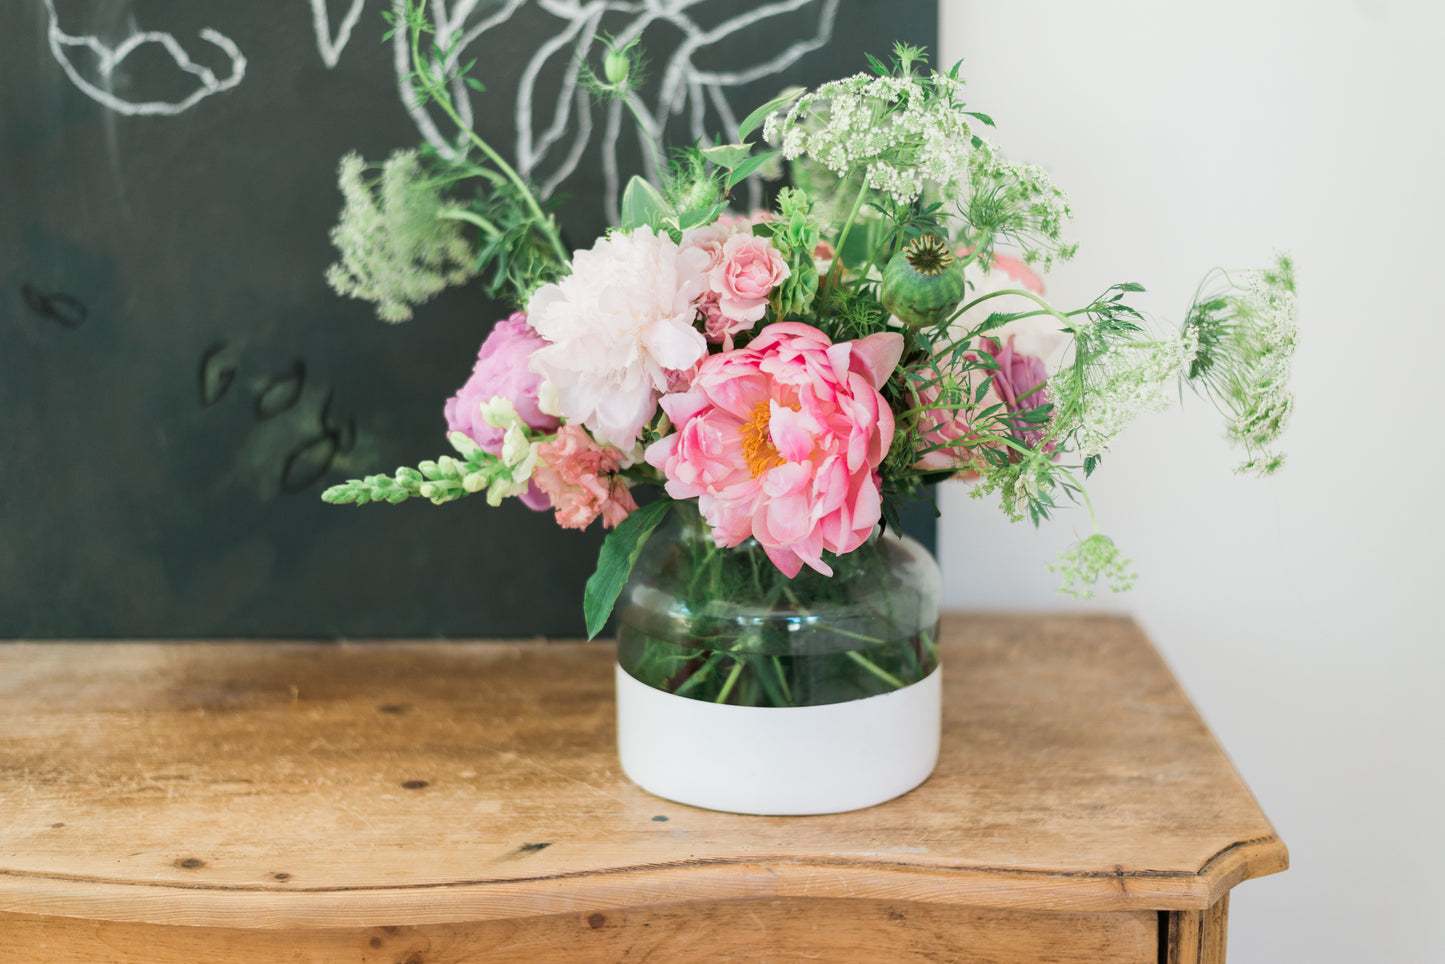 vase for flowers glass white | home decor | wedding gift - Design Club Home